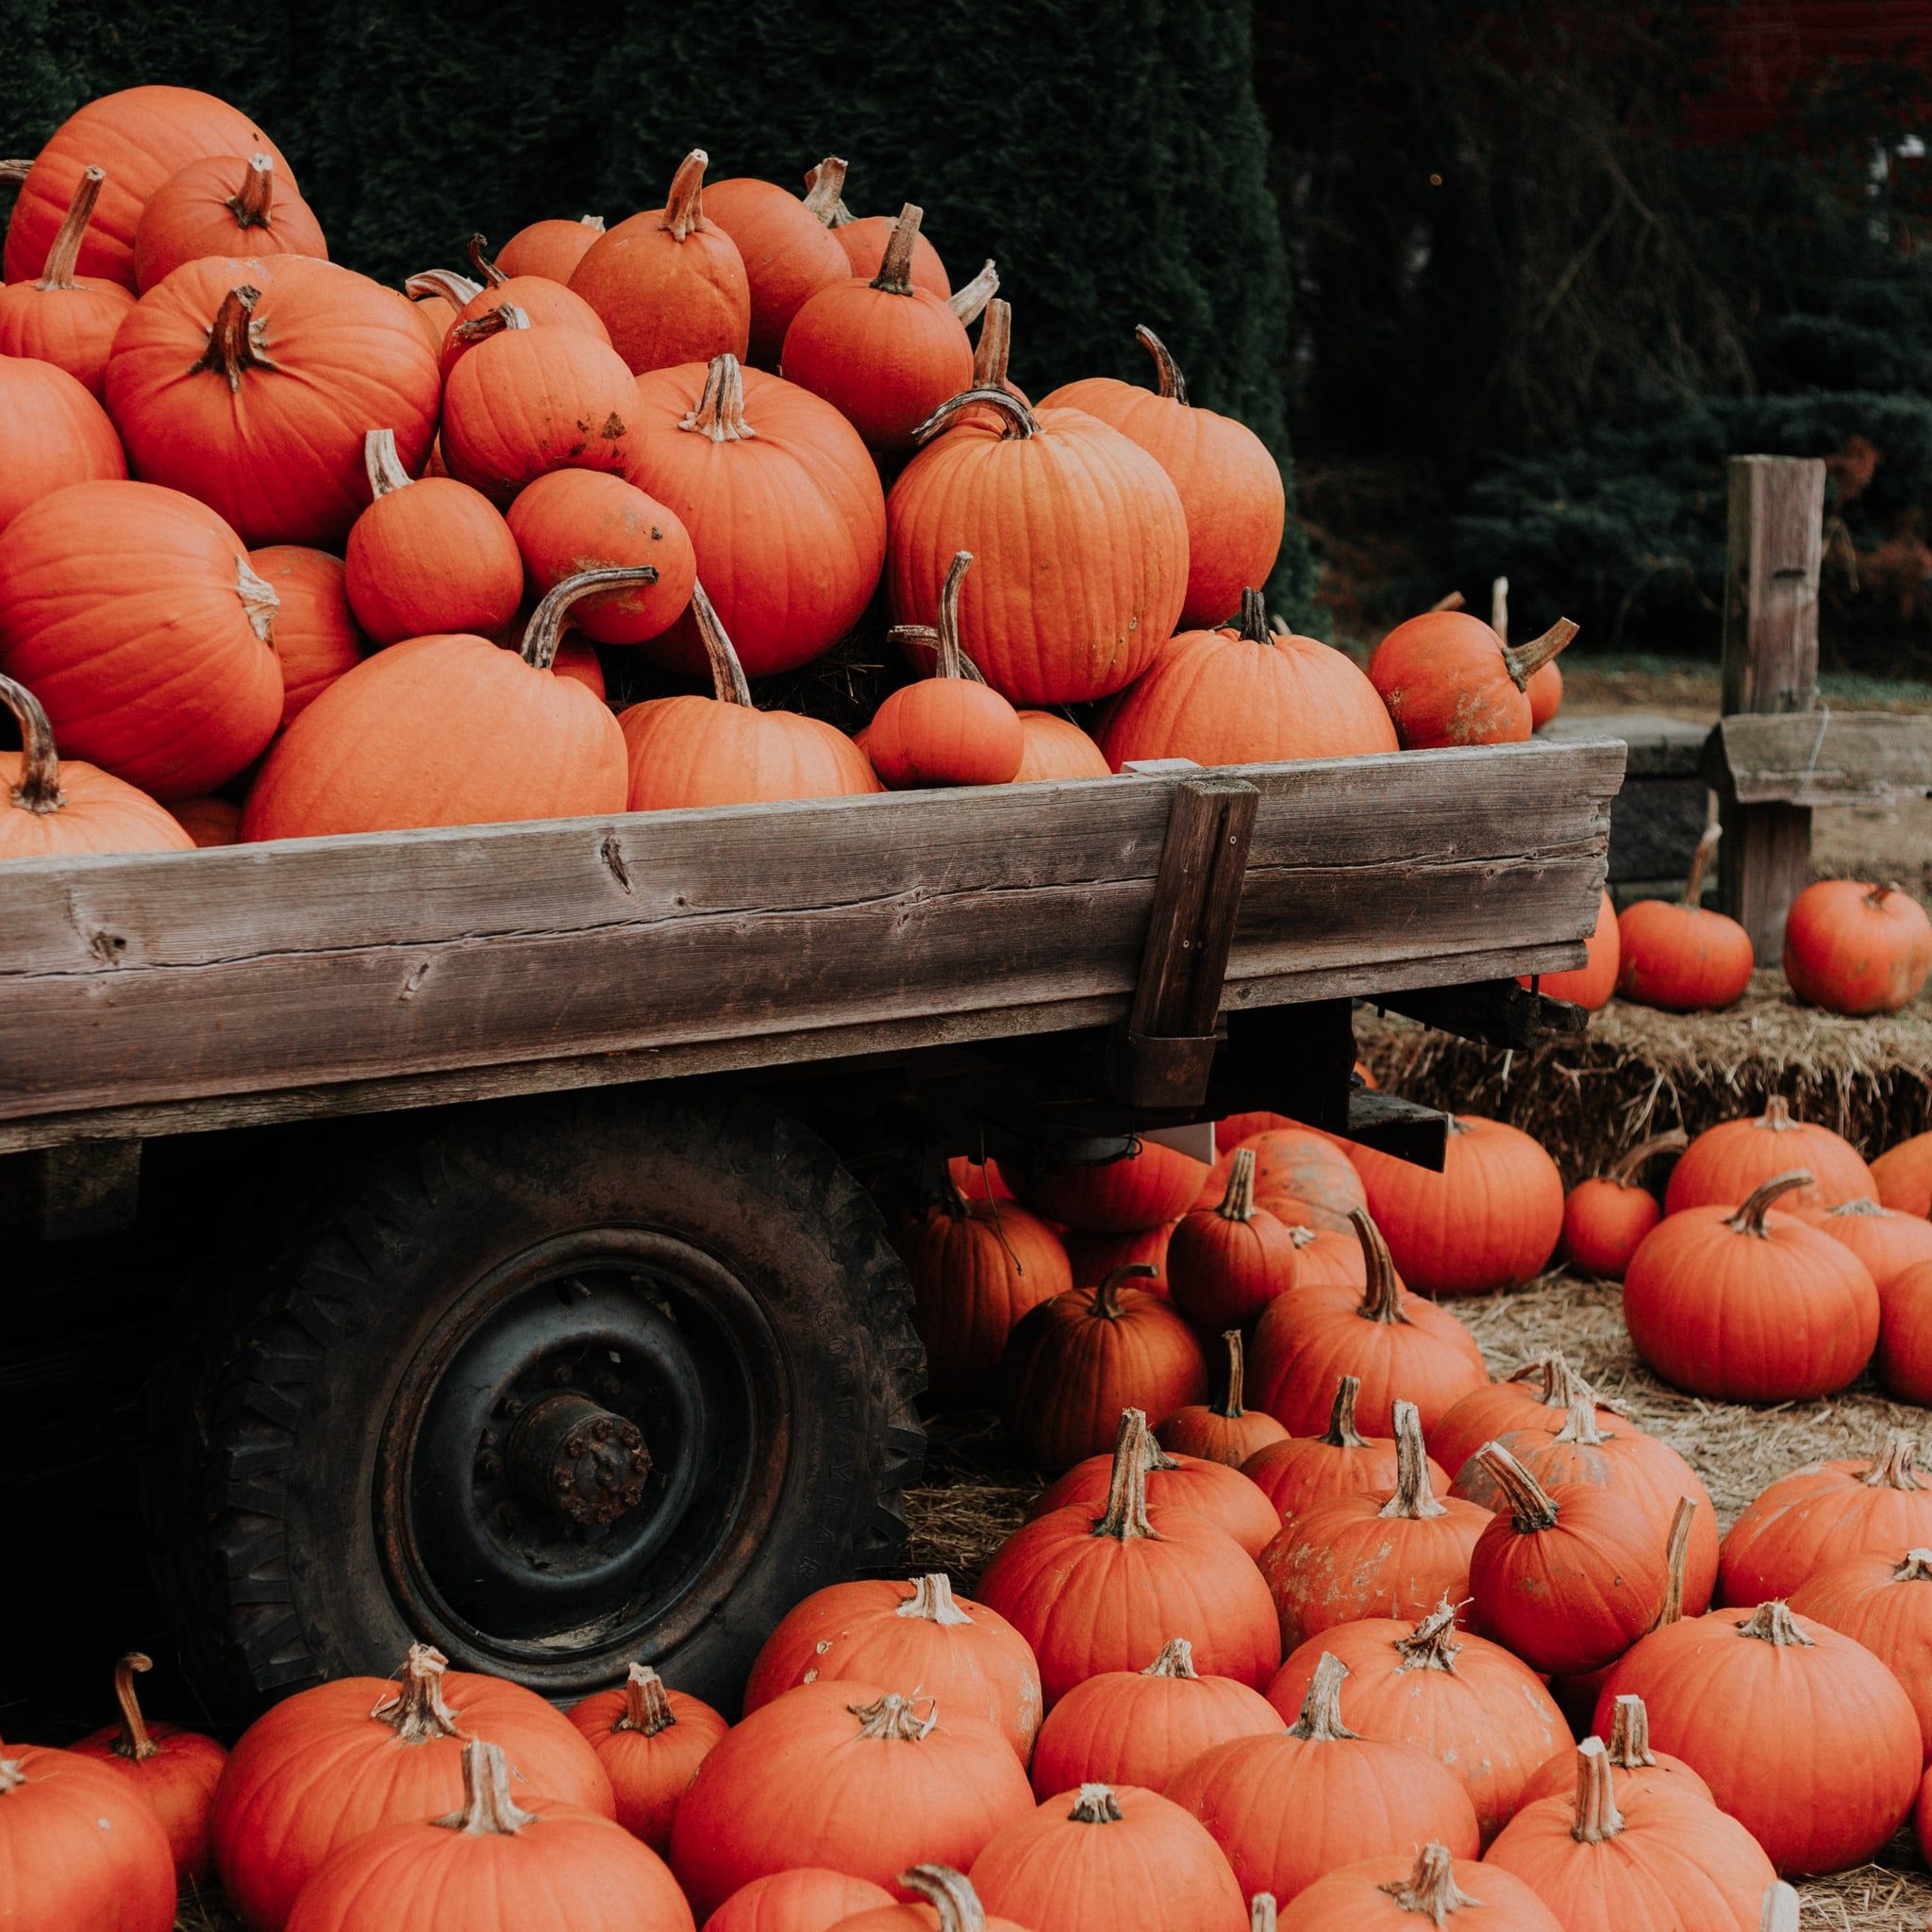 A cart filled with lots of pumpkins - Fall, cute fall, pumpkin, November